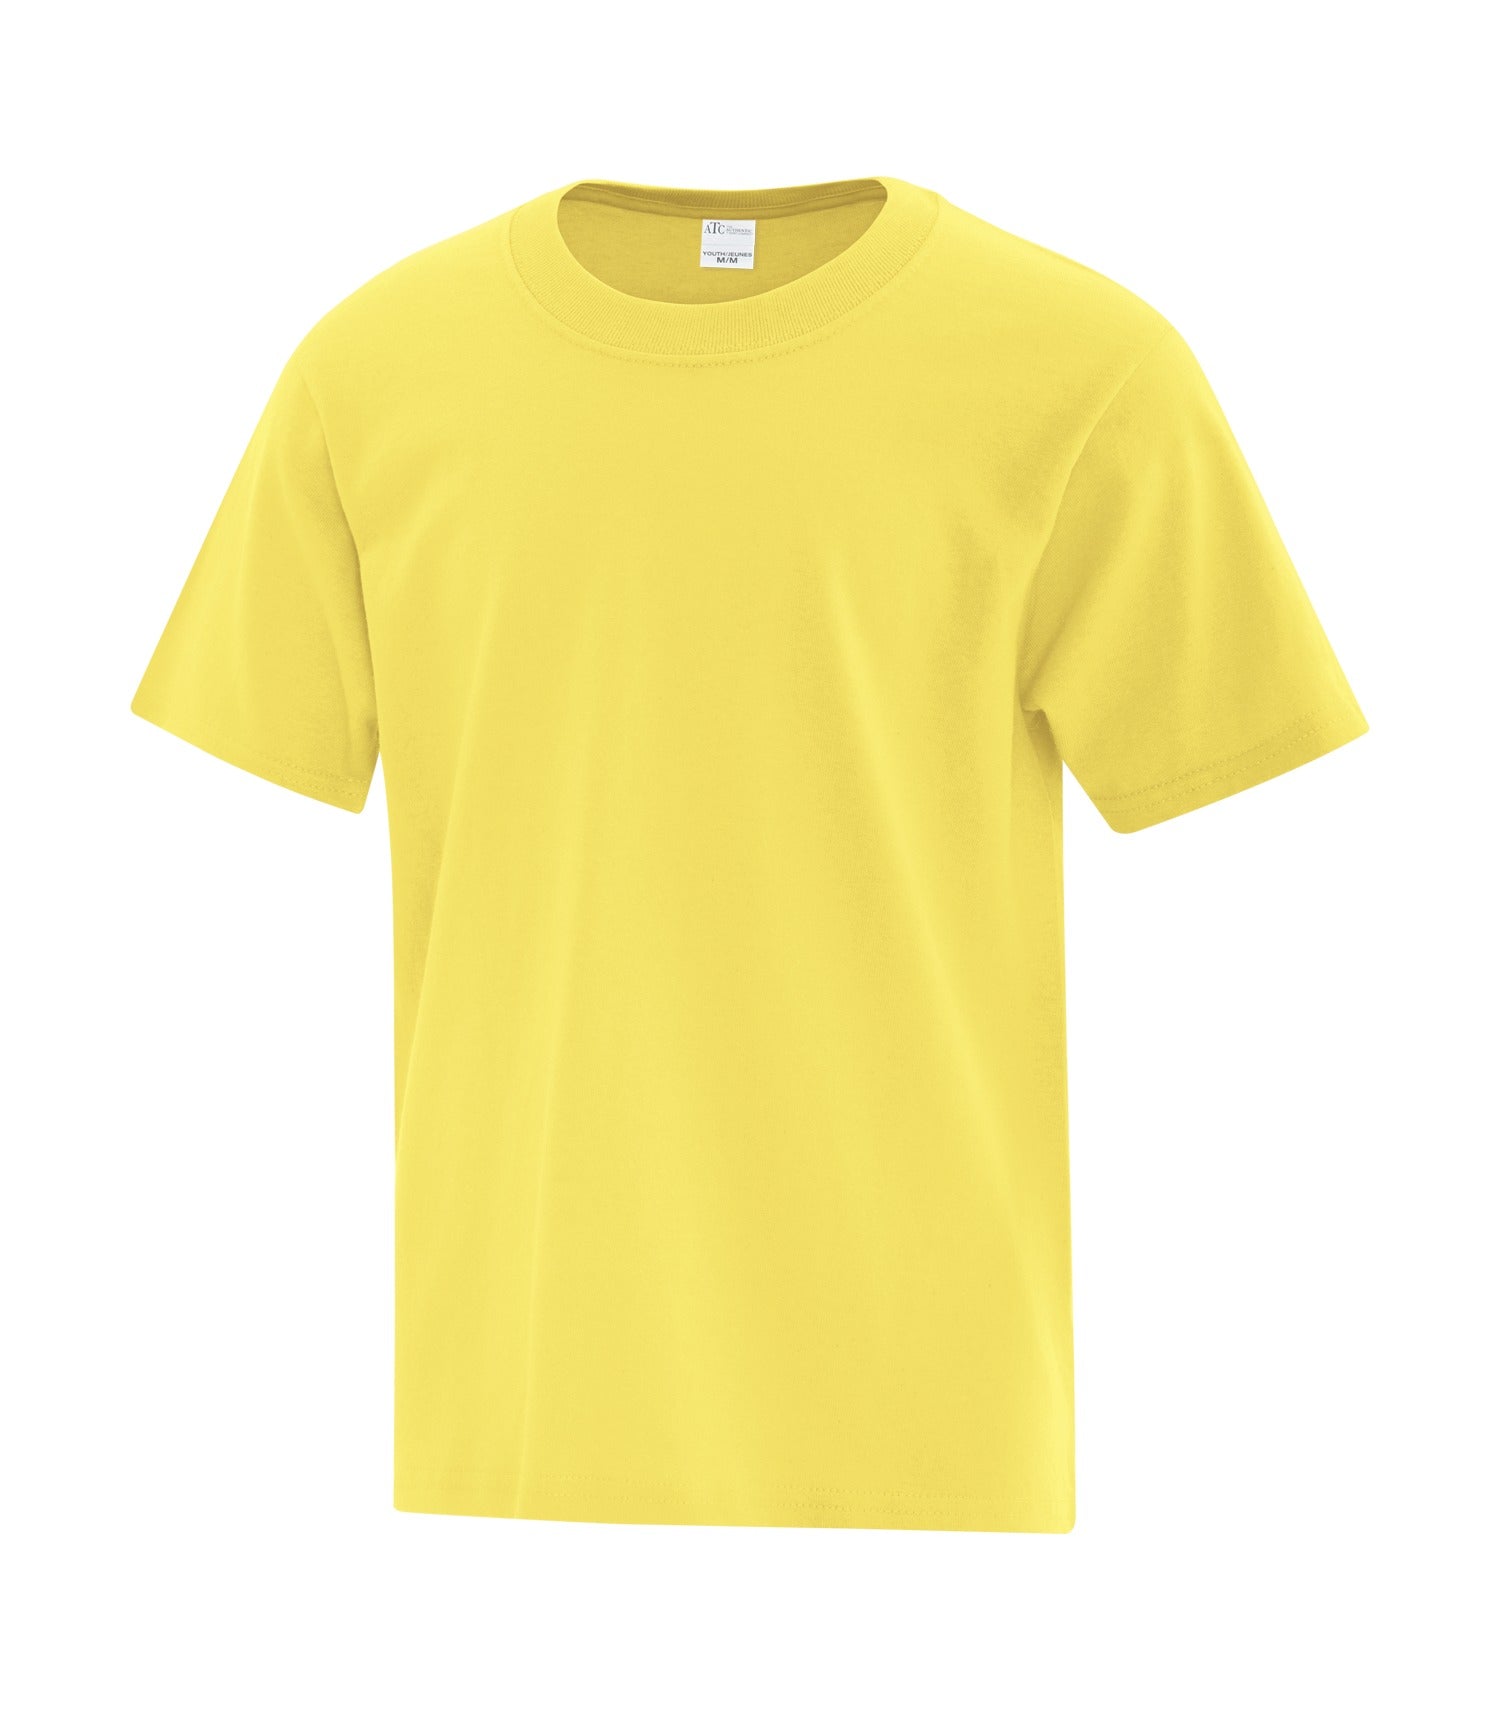 yellow customizable shirt